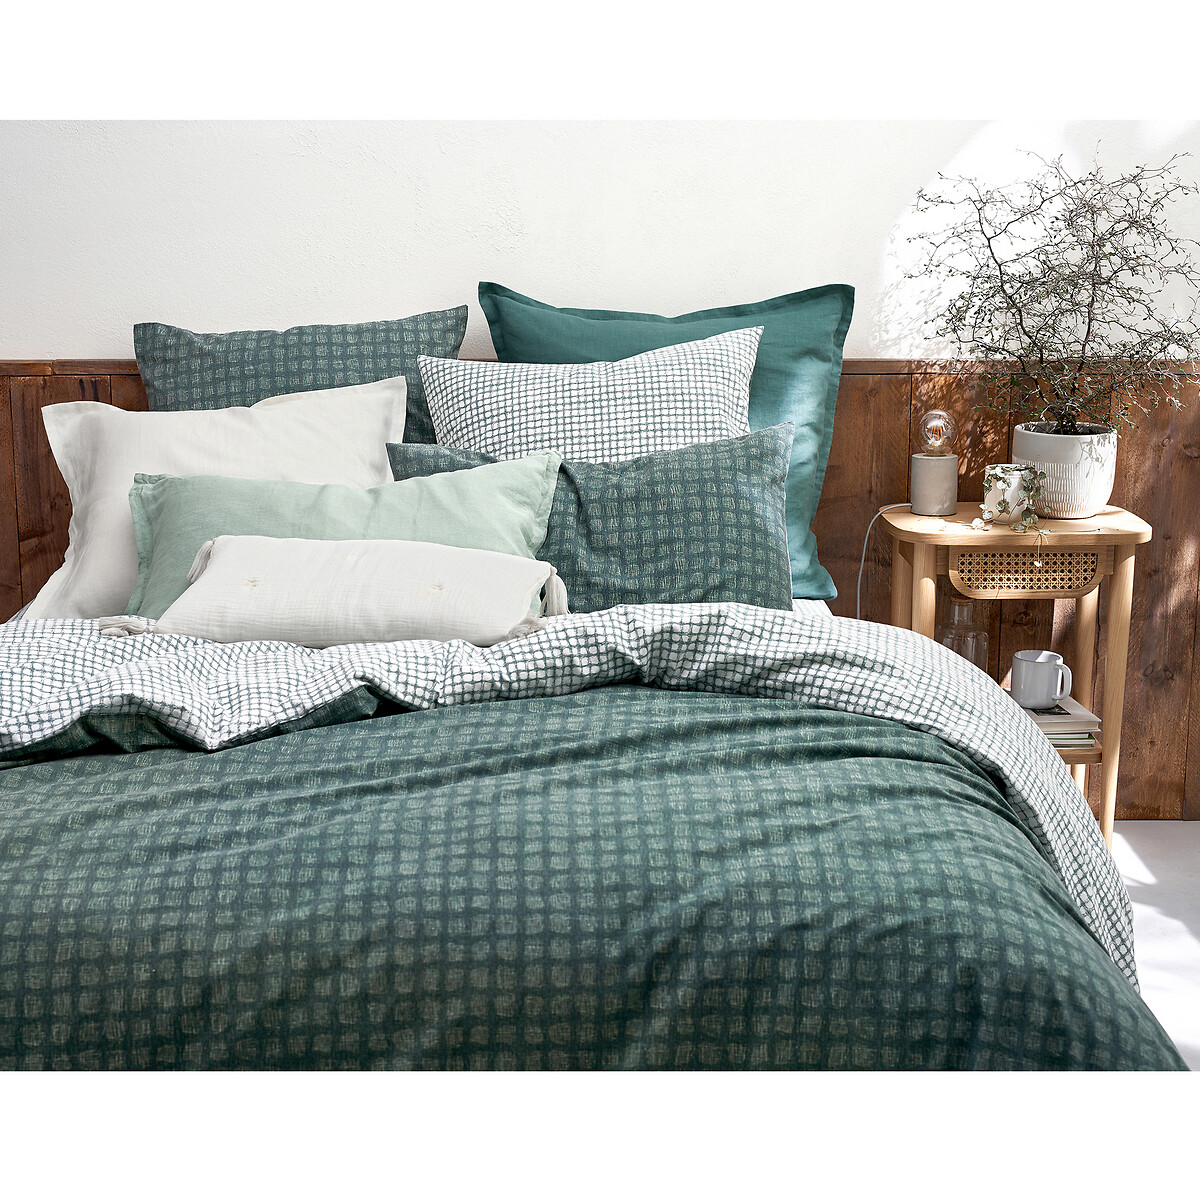 Наволочка LaRedoute чехол на подушку-валик KUMLA 65 x 65 см зеленый, размер 65 x 65 см - фото 3